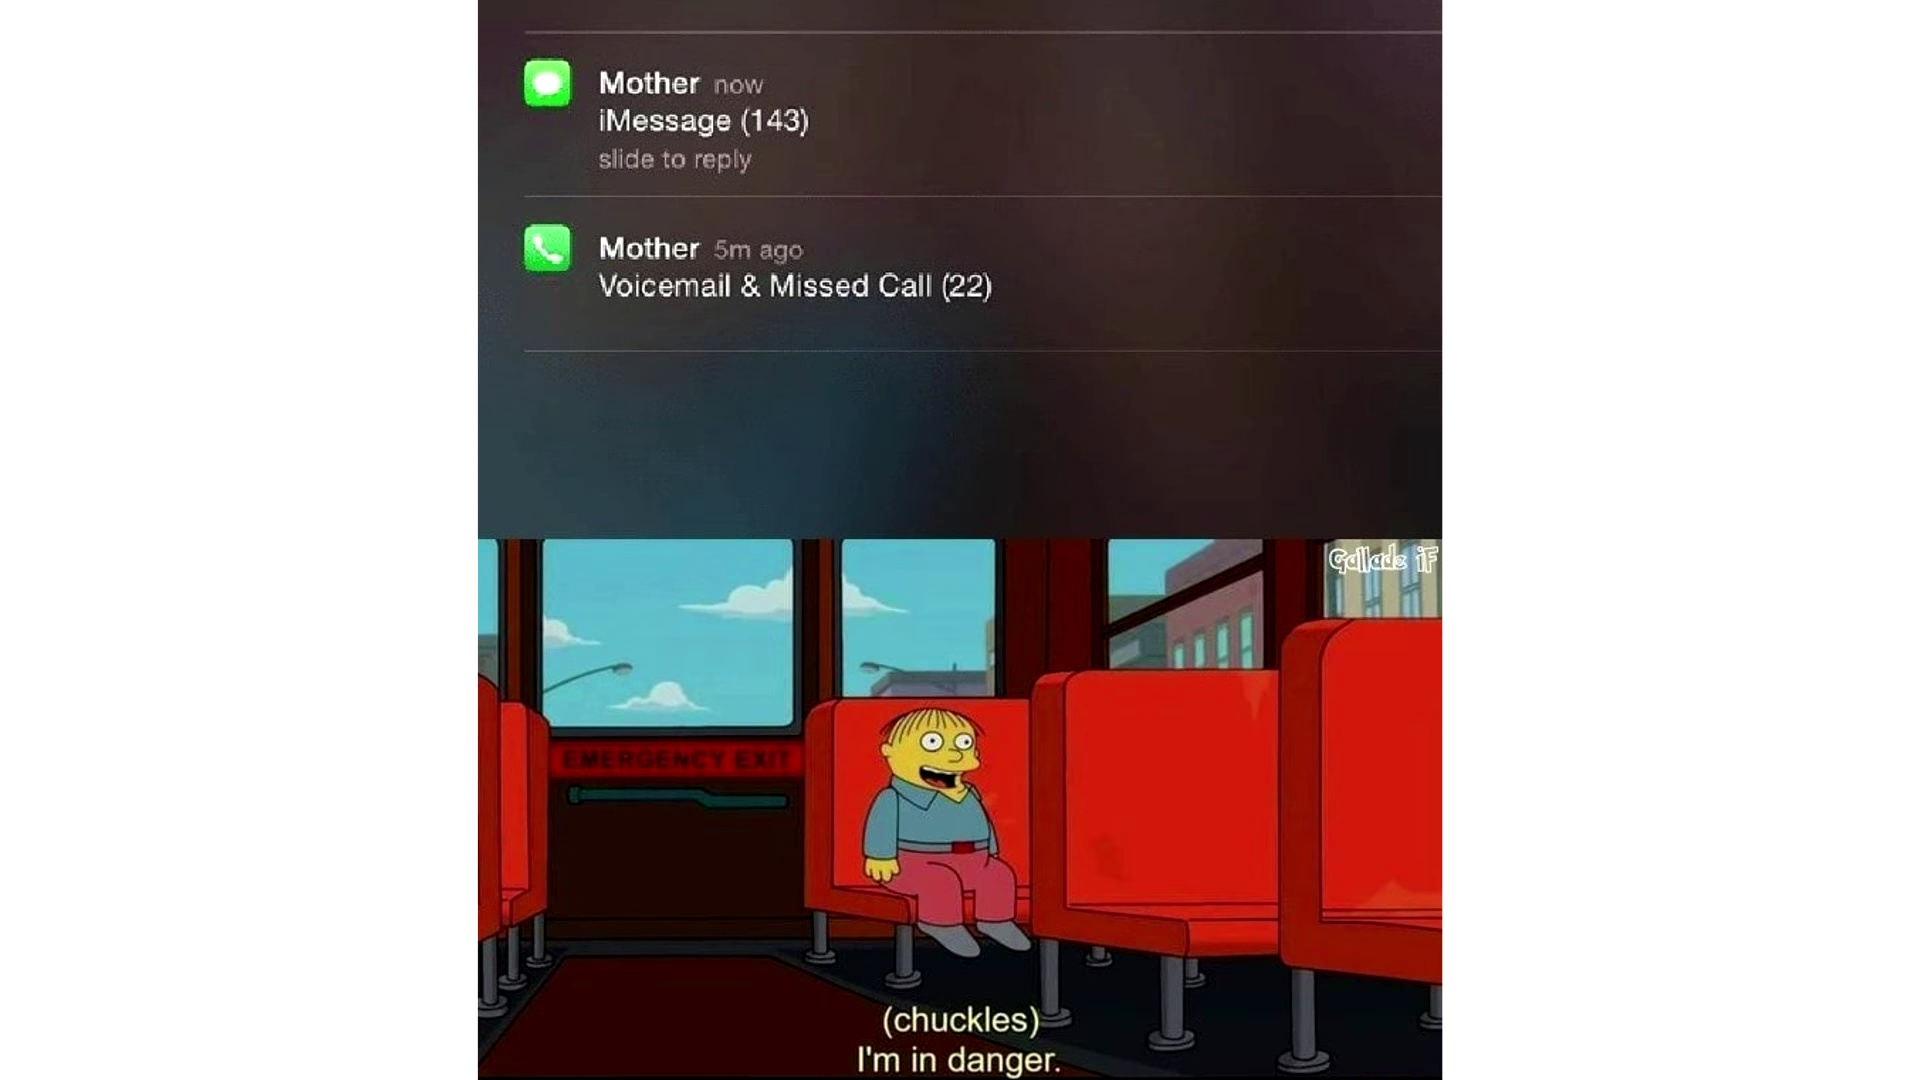 Mom - meme